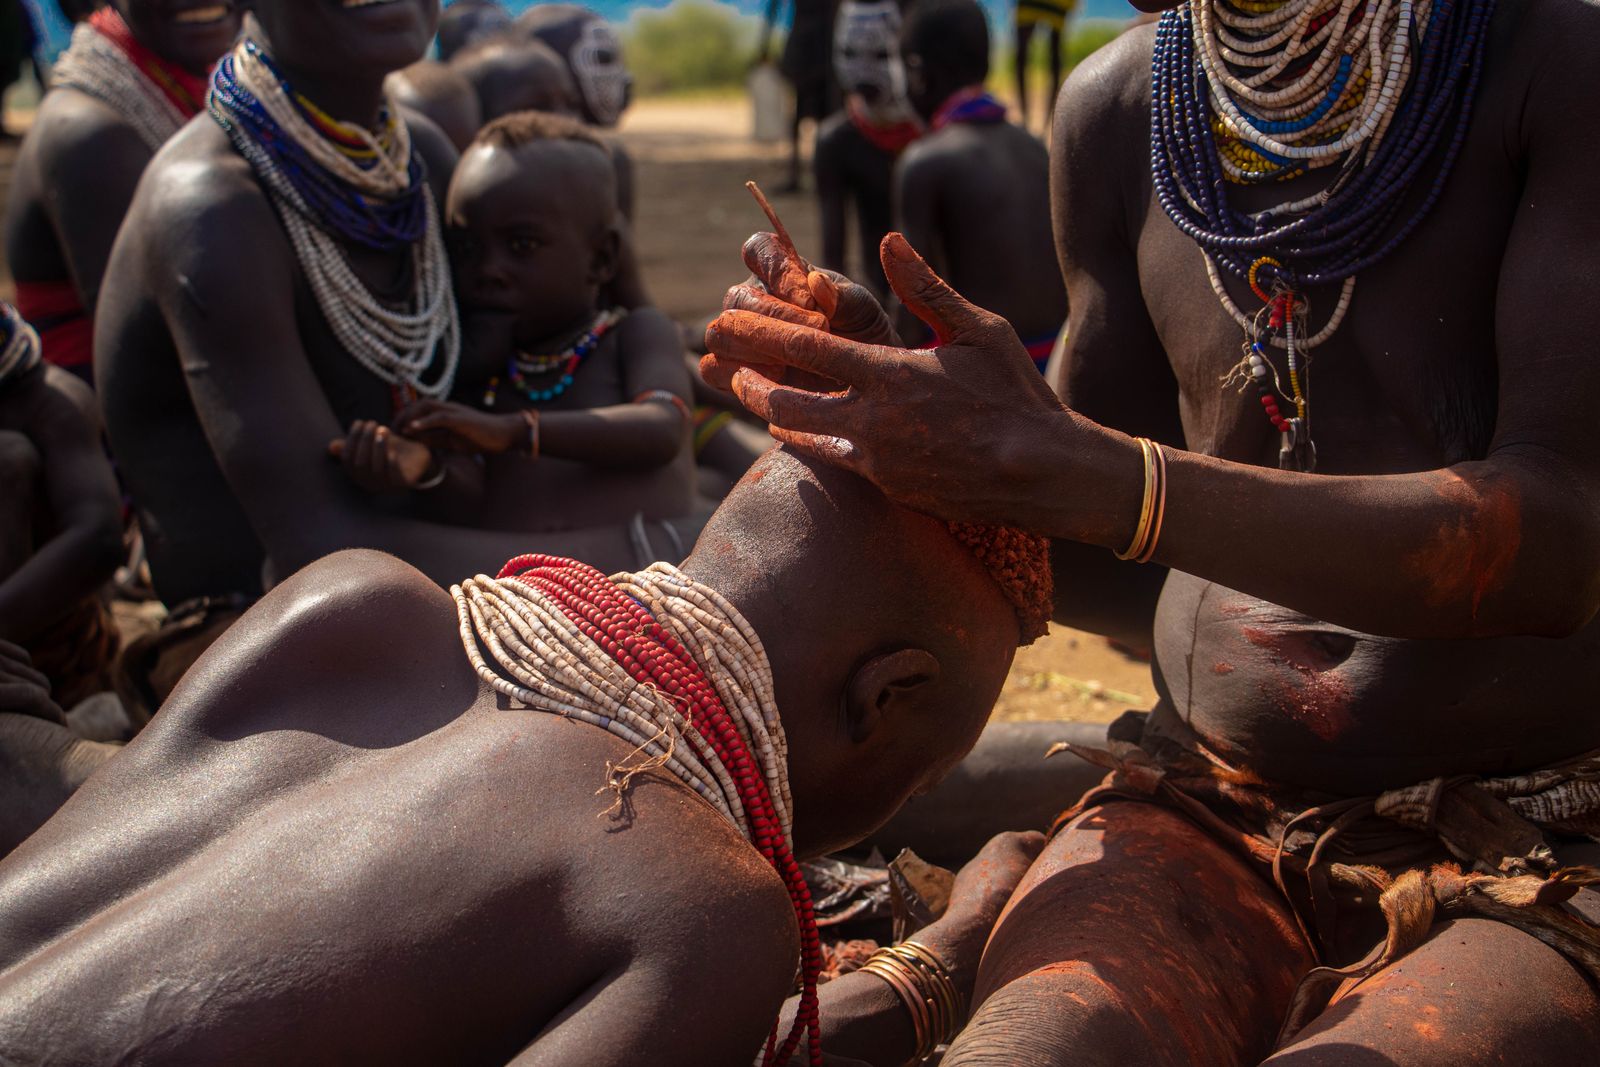 © Nwando Ebeledike - Community of women in the Karo Tribe, Omo Valley, Ethiopia